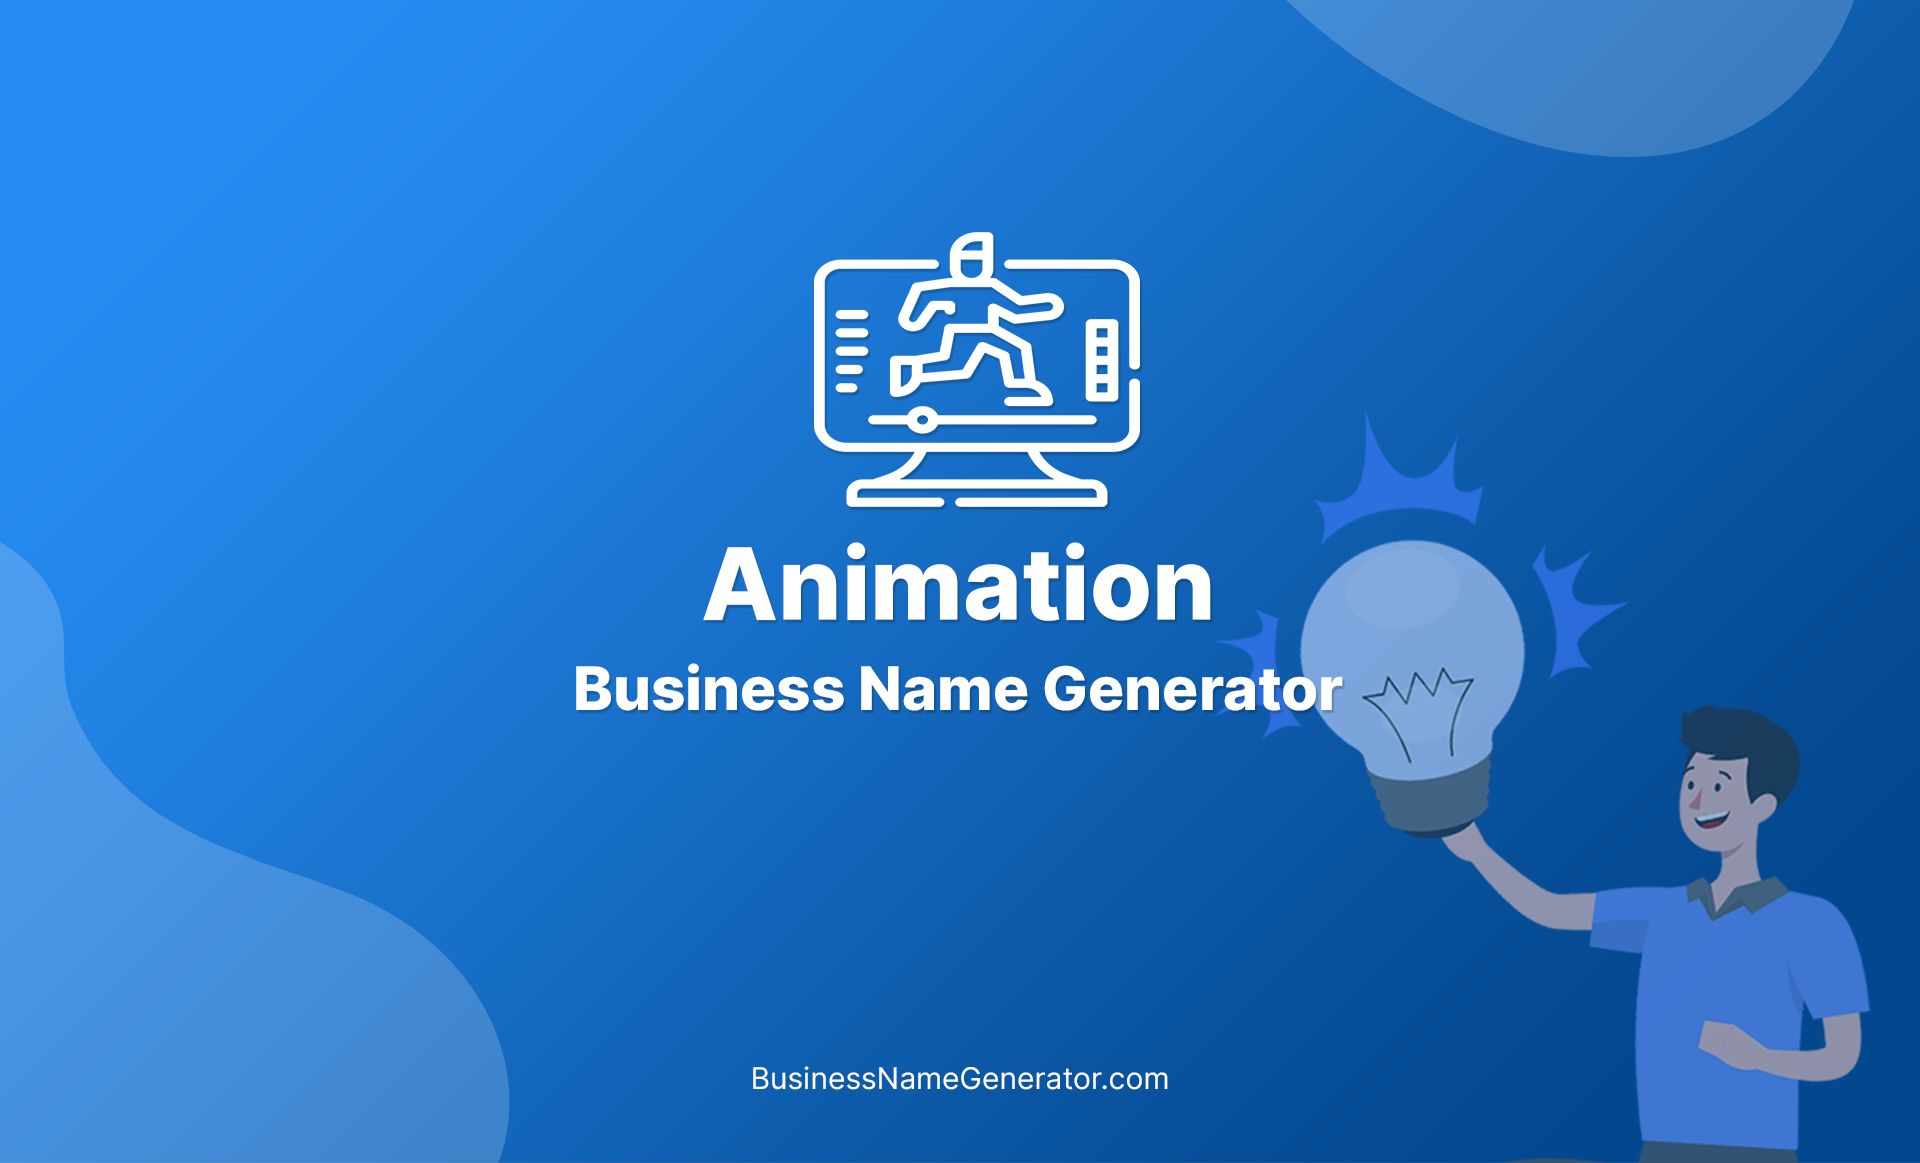 Animation Business Name Generator